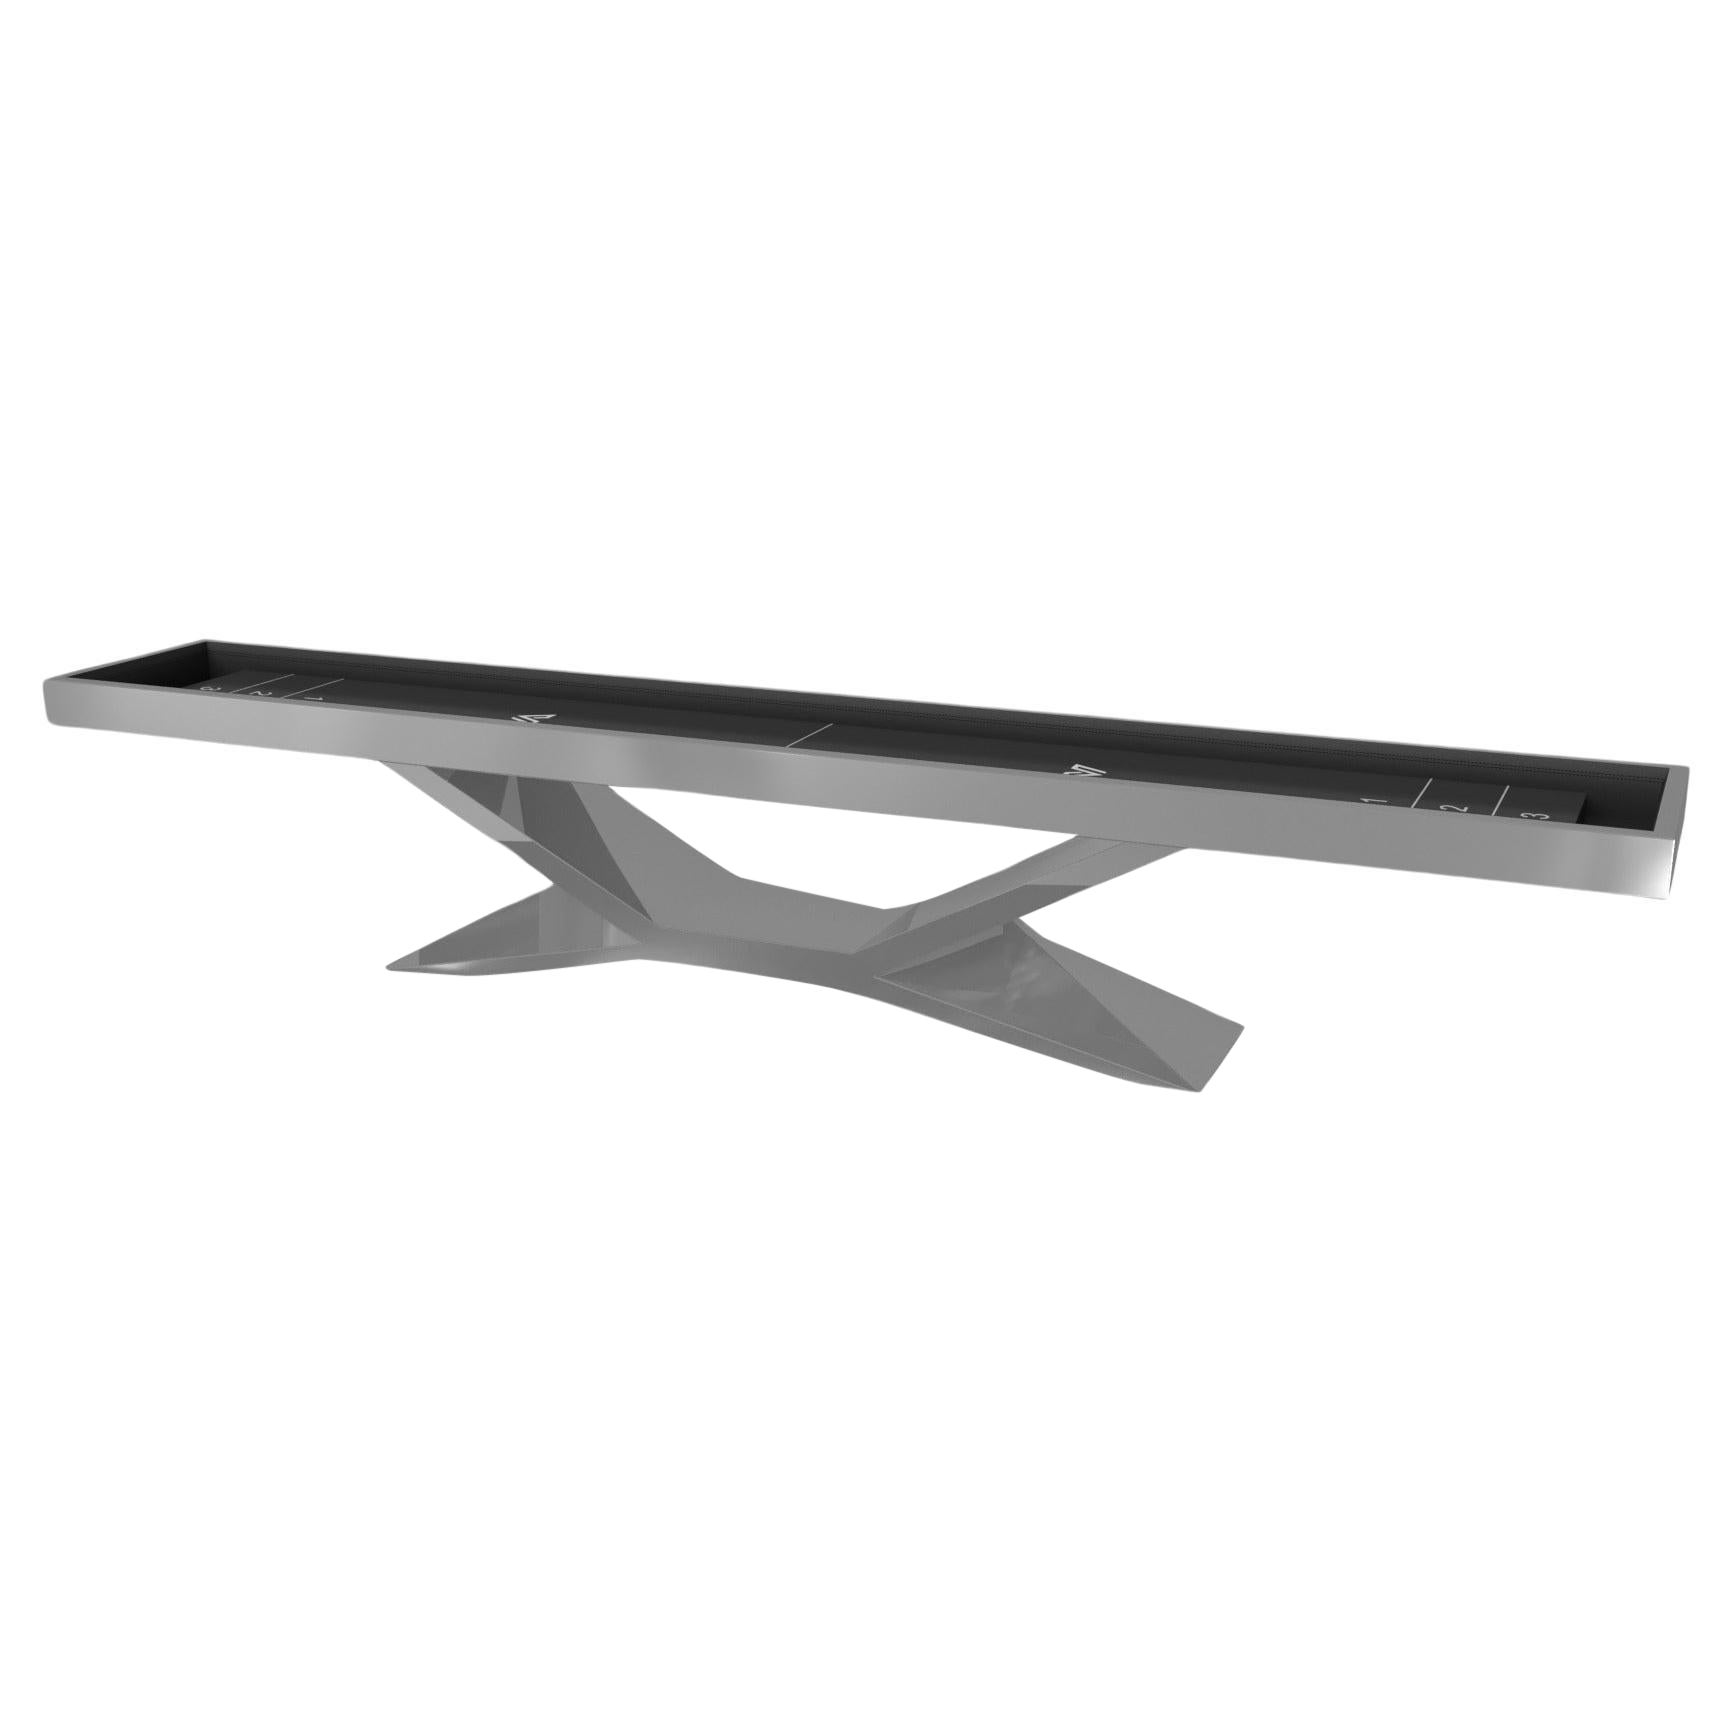 Elevate Customs Kors Shuffleboard Tables/Stainless Steel Sheet Metal in 12' -USA